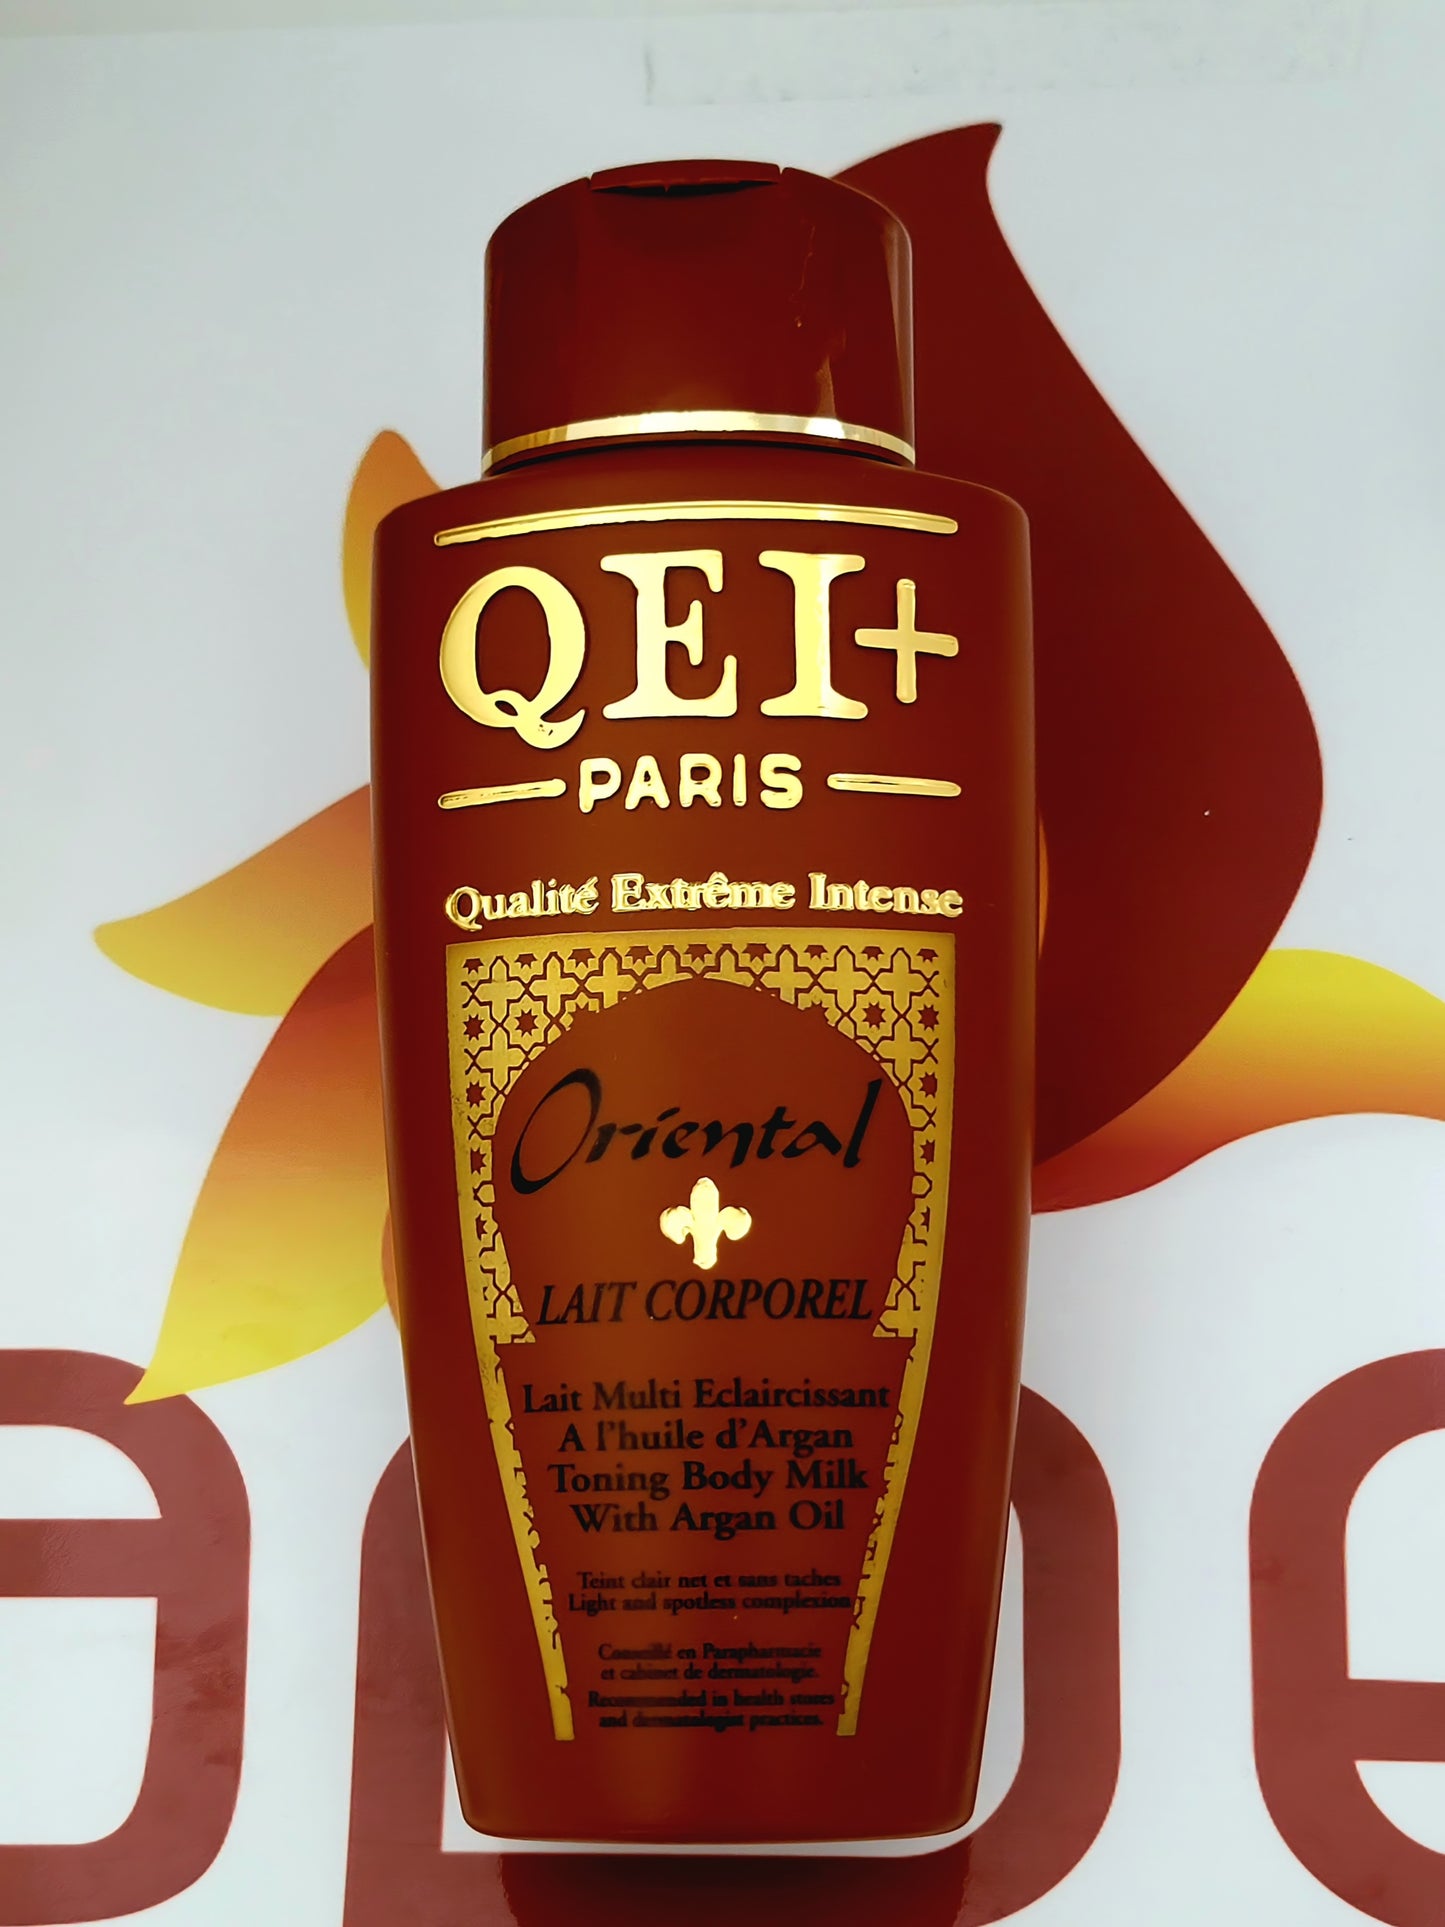 QEI+ Paris Oriental Lait Corporel Toning Body Milk 500ml